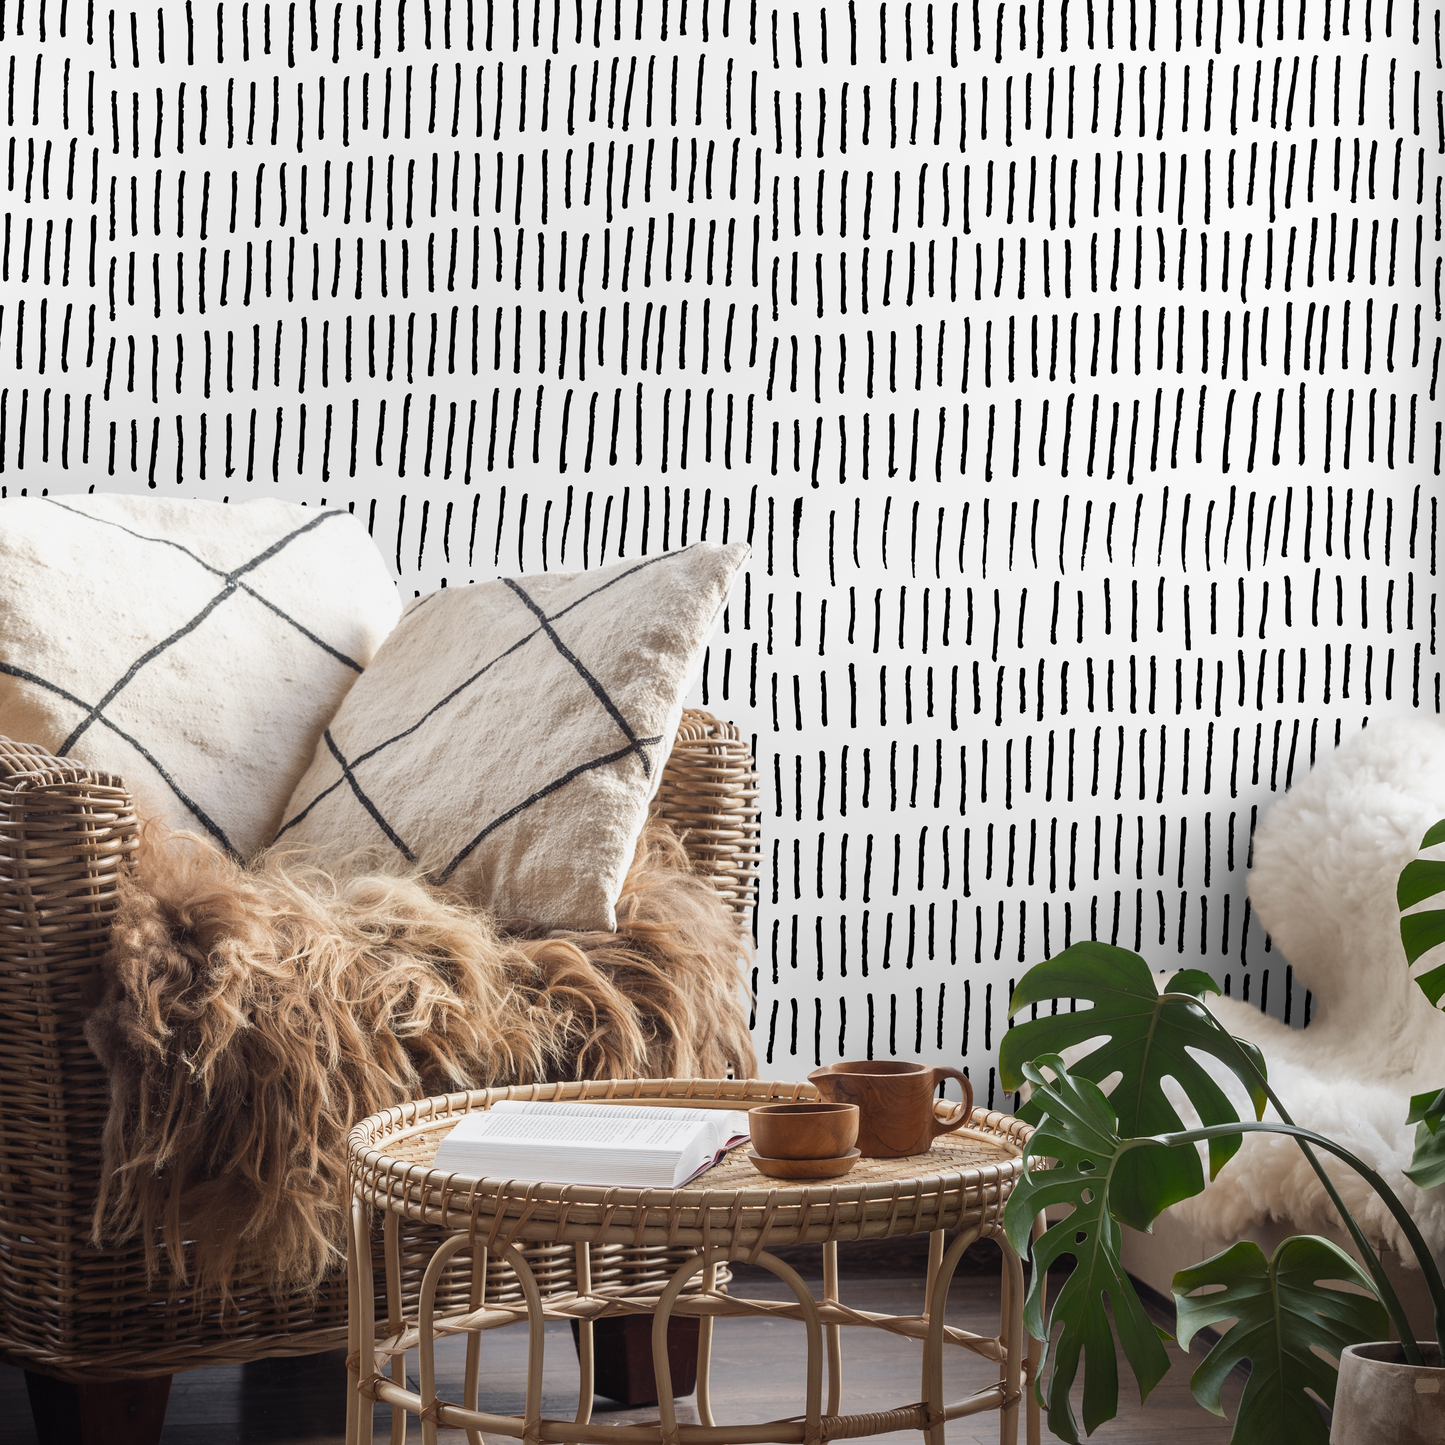 Removable Wallpaper, Scandinavian Wallpaper, Temporary Wallpaper, Minimalistic Wallpaper, Peel and Stick Wallpaper, Wall Paper, Boho - A352